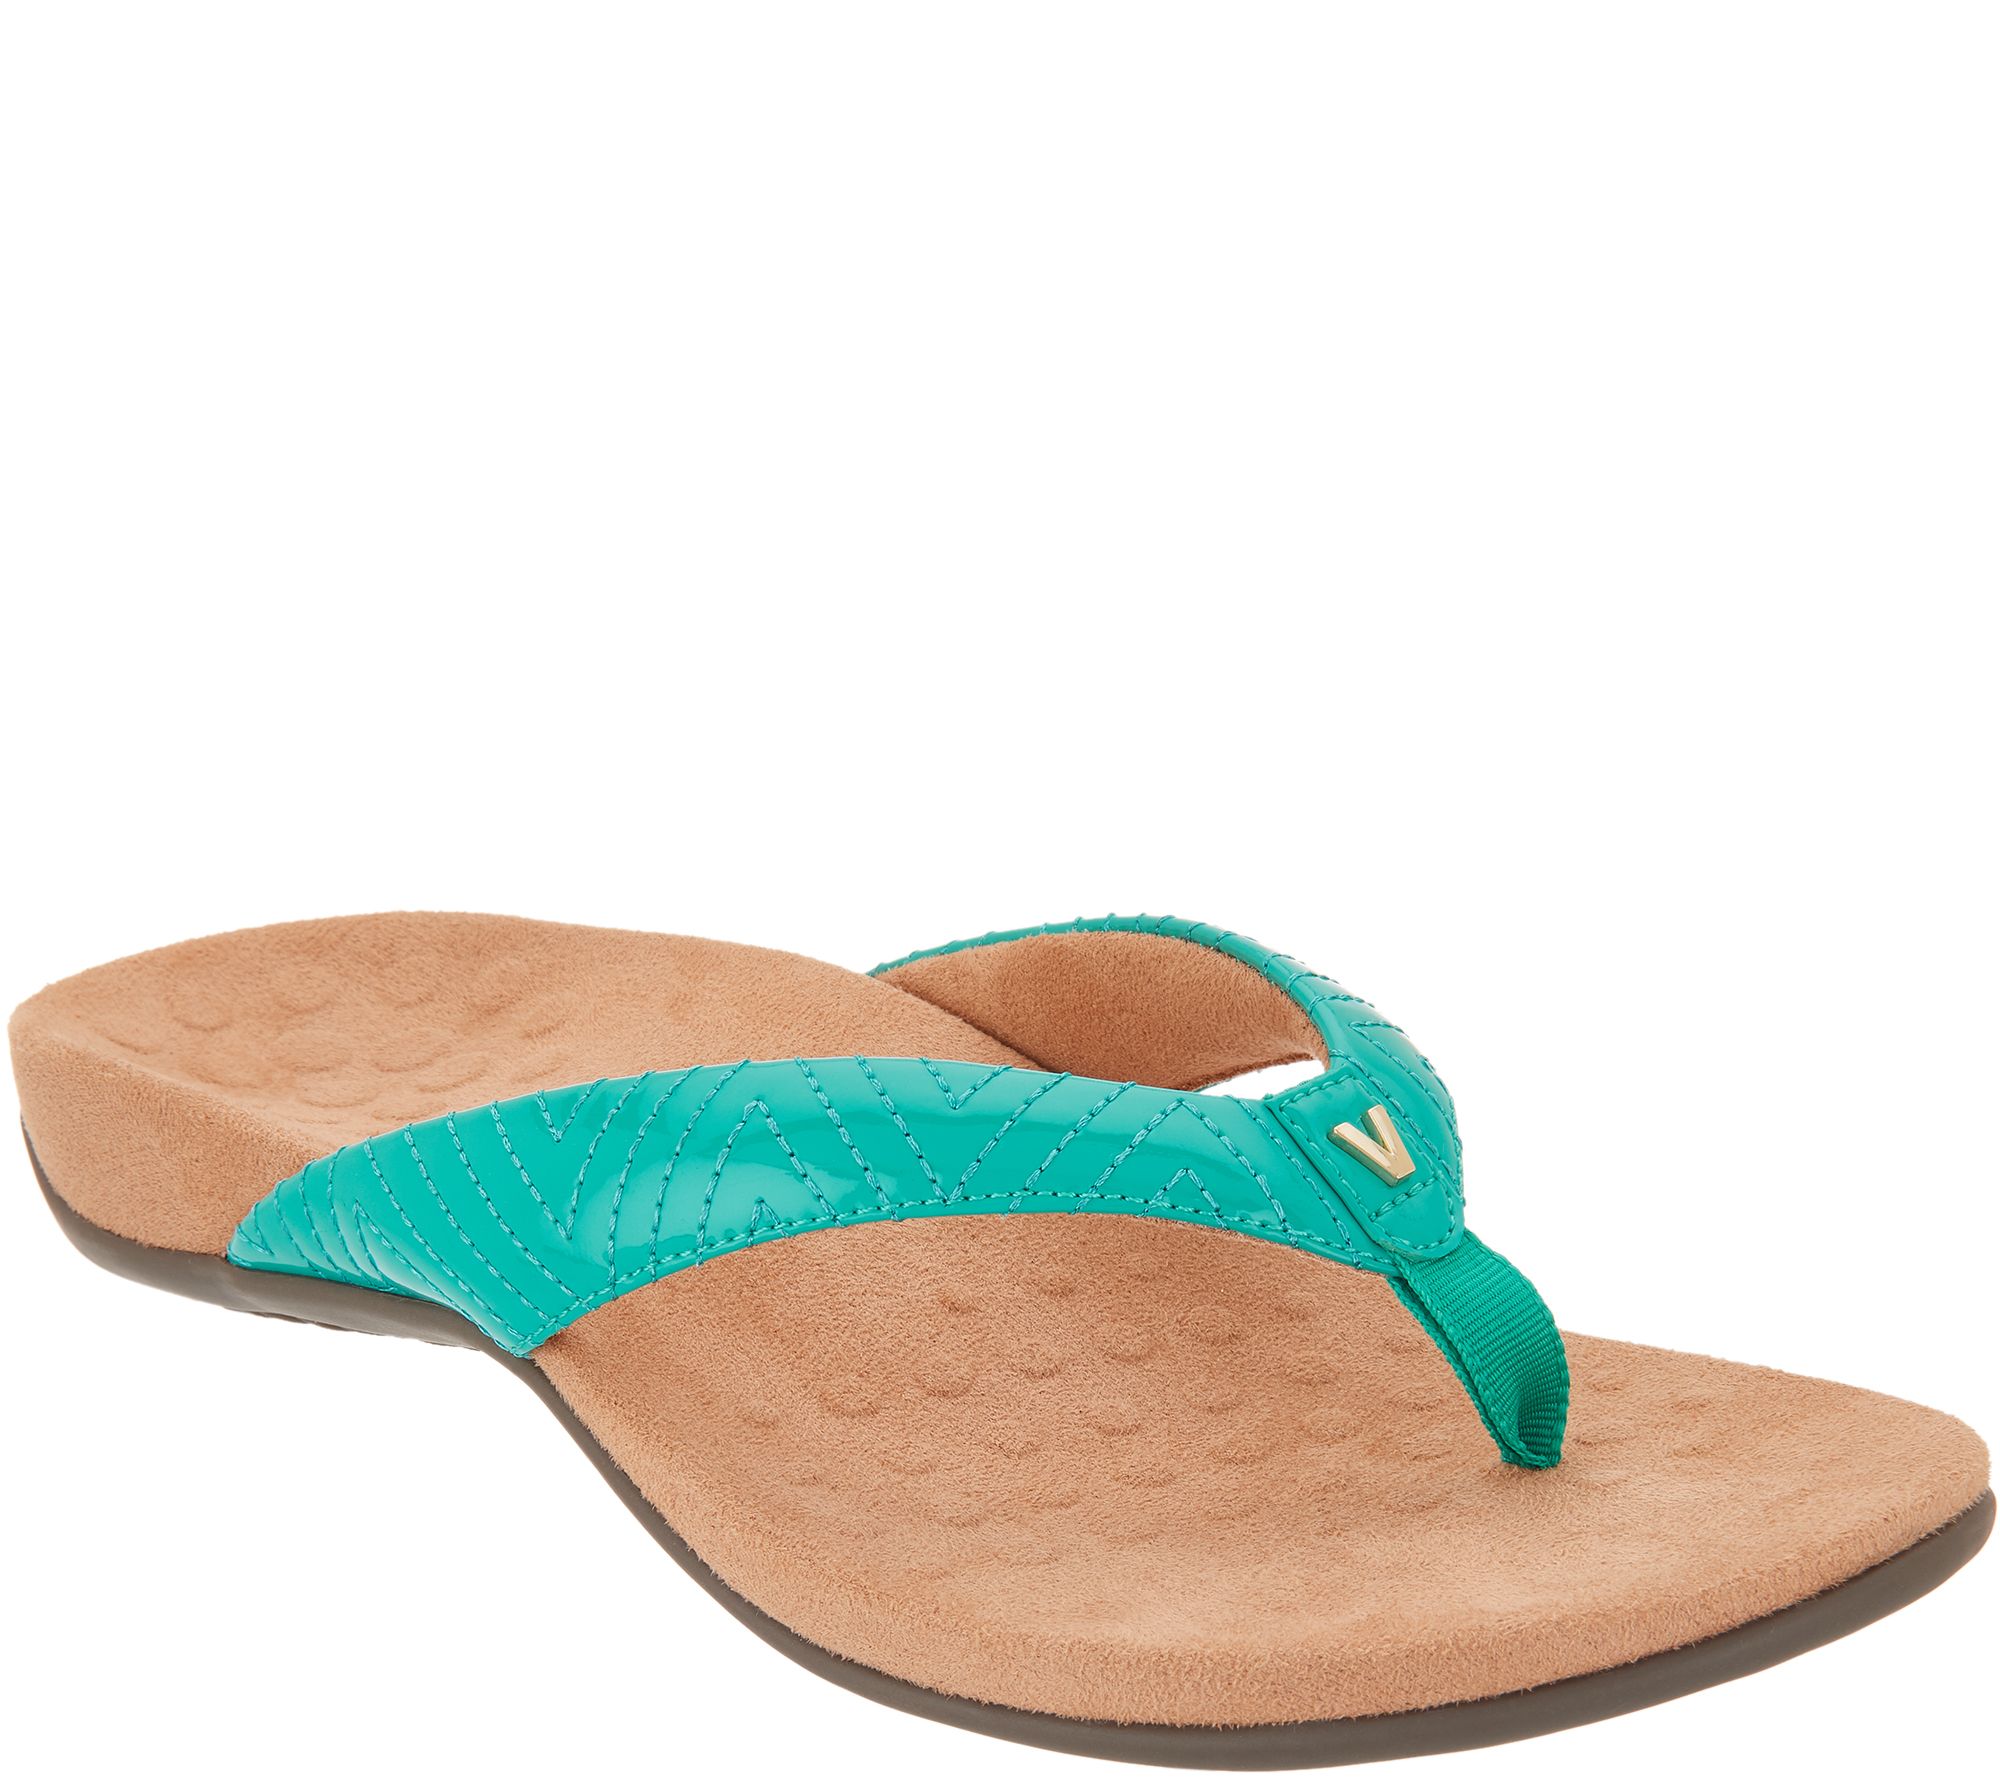 Vionic Patent Thong Sandals w/ 'V' Detail - Jen - QVC.com